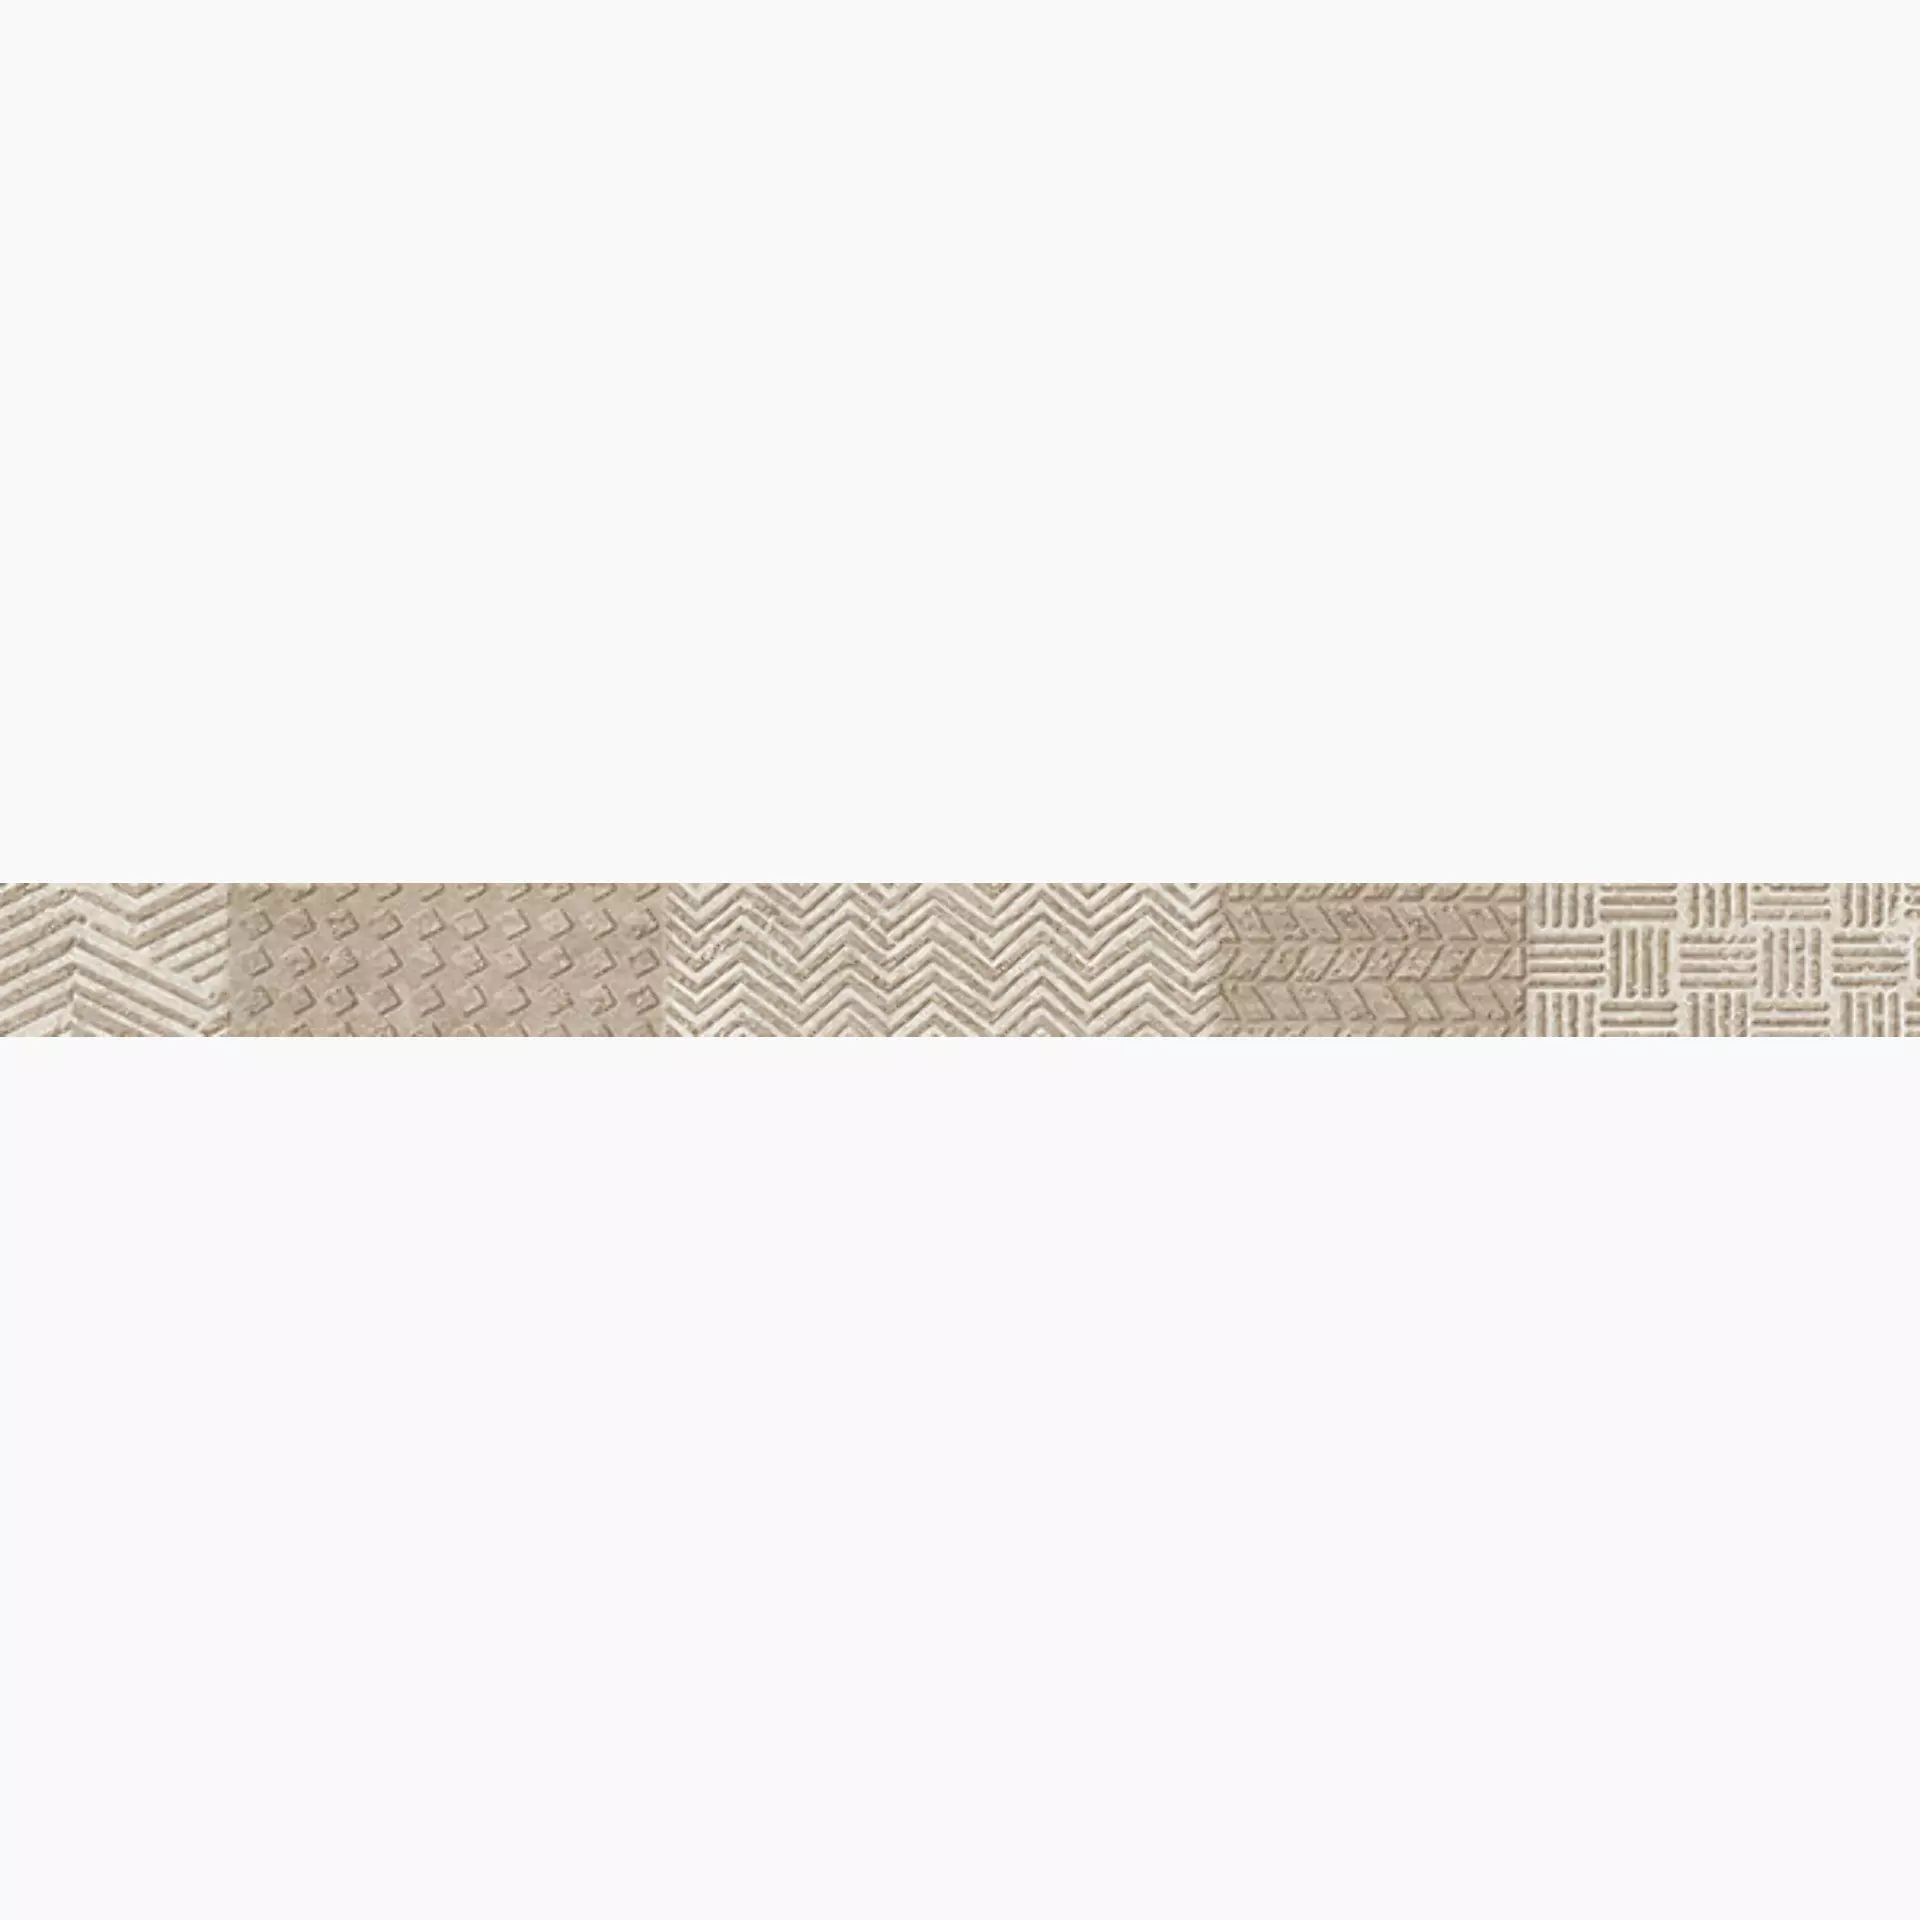 MGM Urban Rope,Ecru Rope,Ecru URBALISEDEROEC 4,8x60cm Bordüre Eden 8,5mm